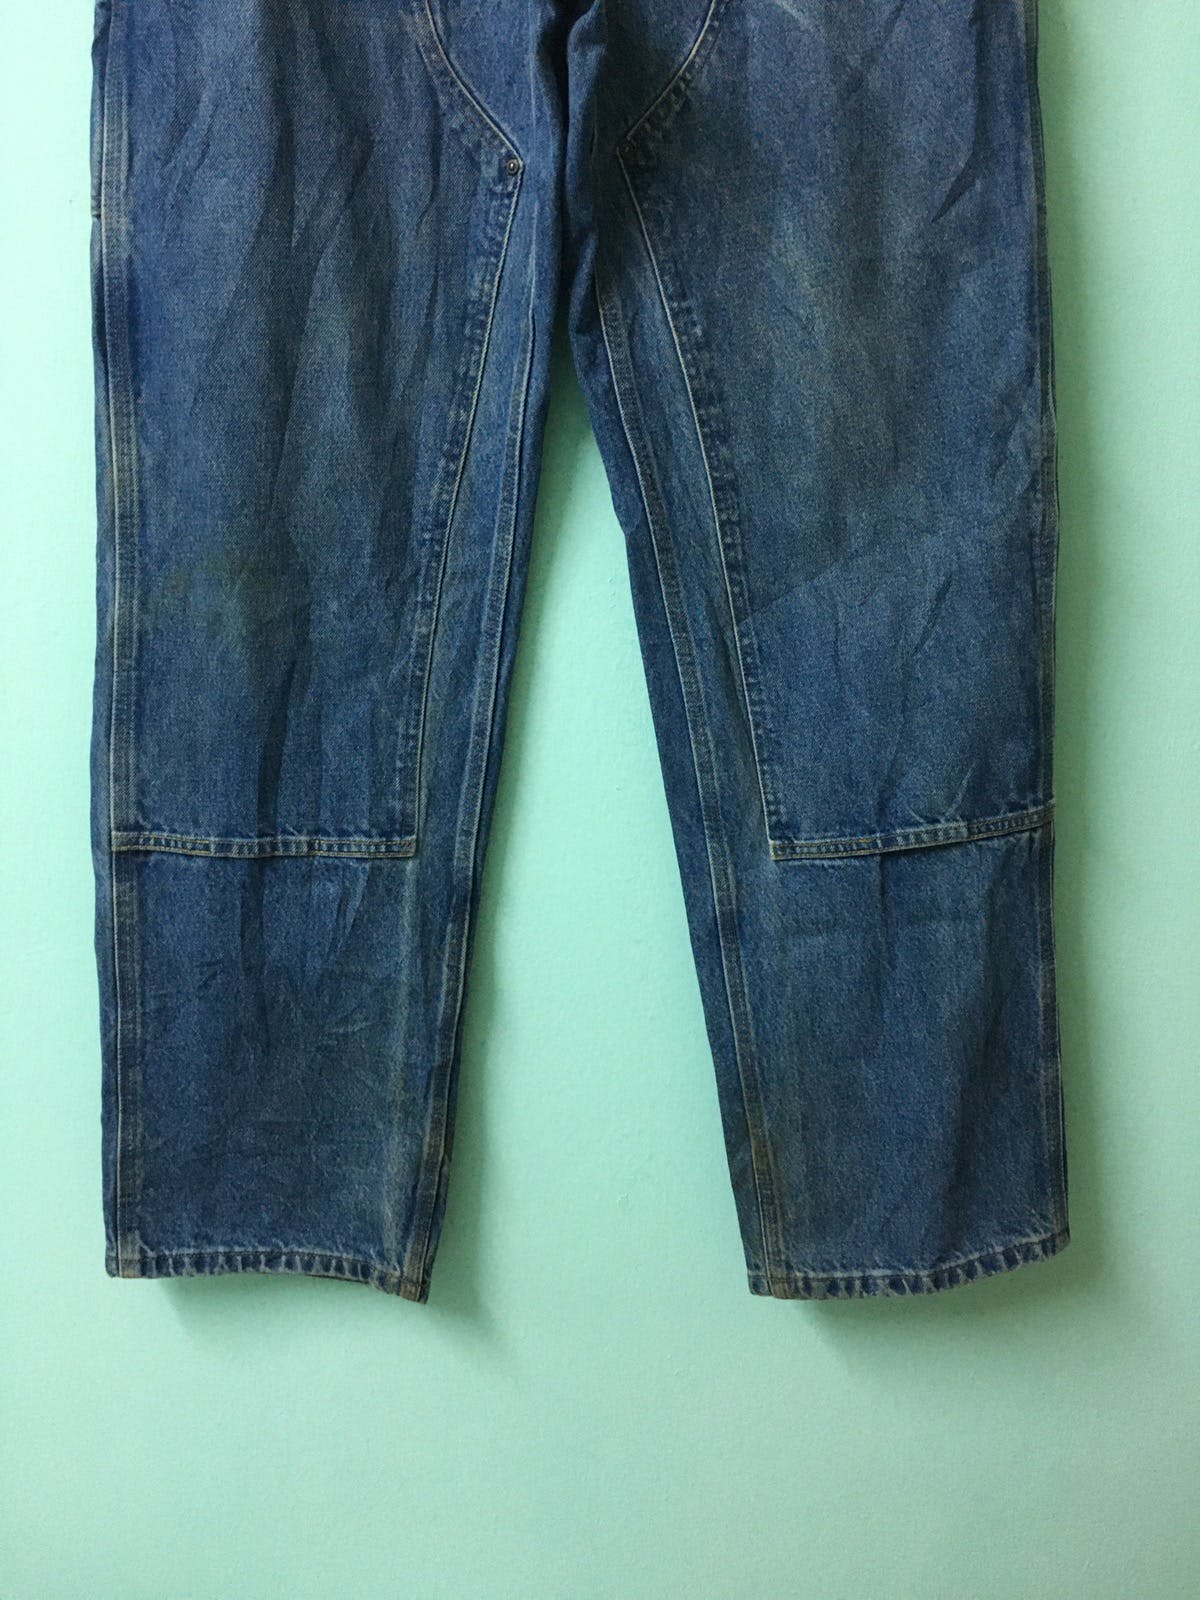 Carharrt double knee jeans - 2